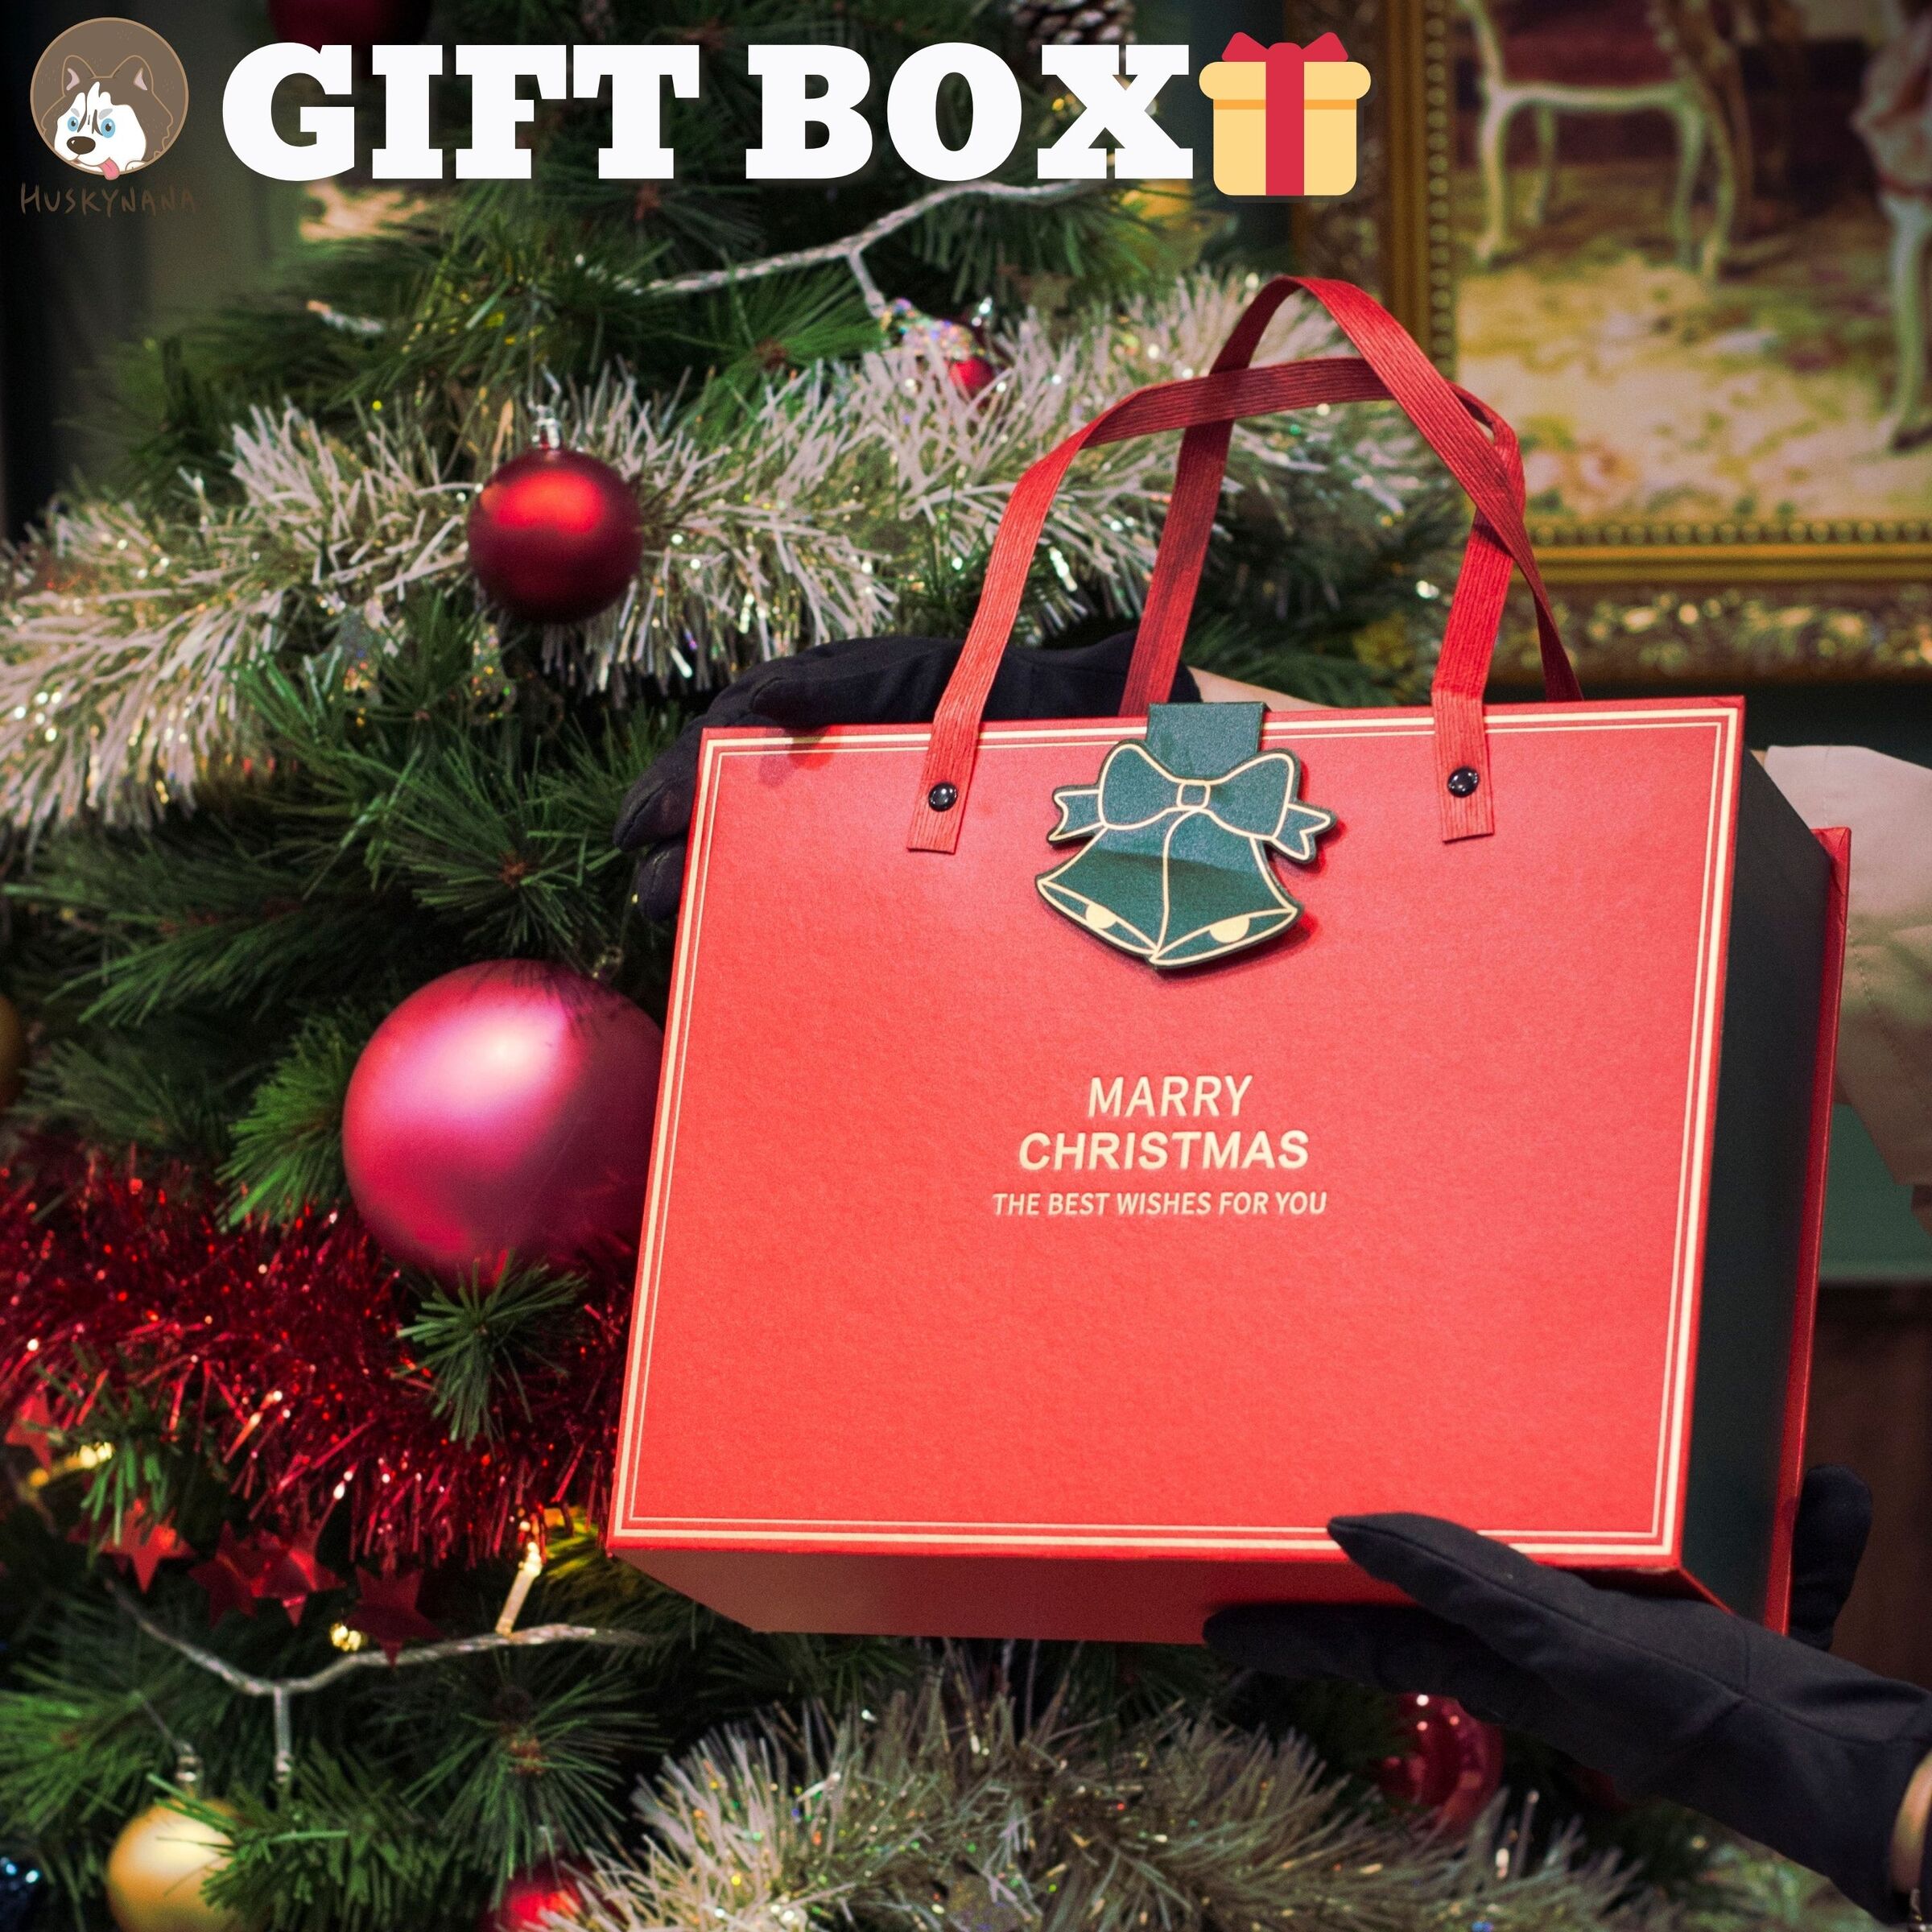 Gift Box聖誕禮盒